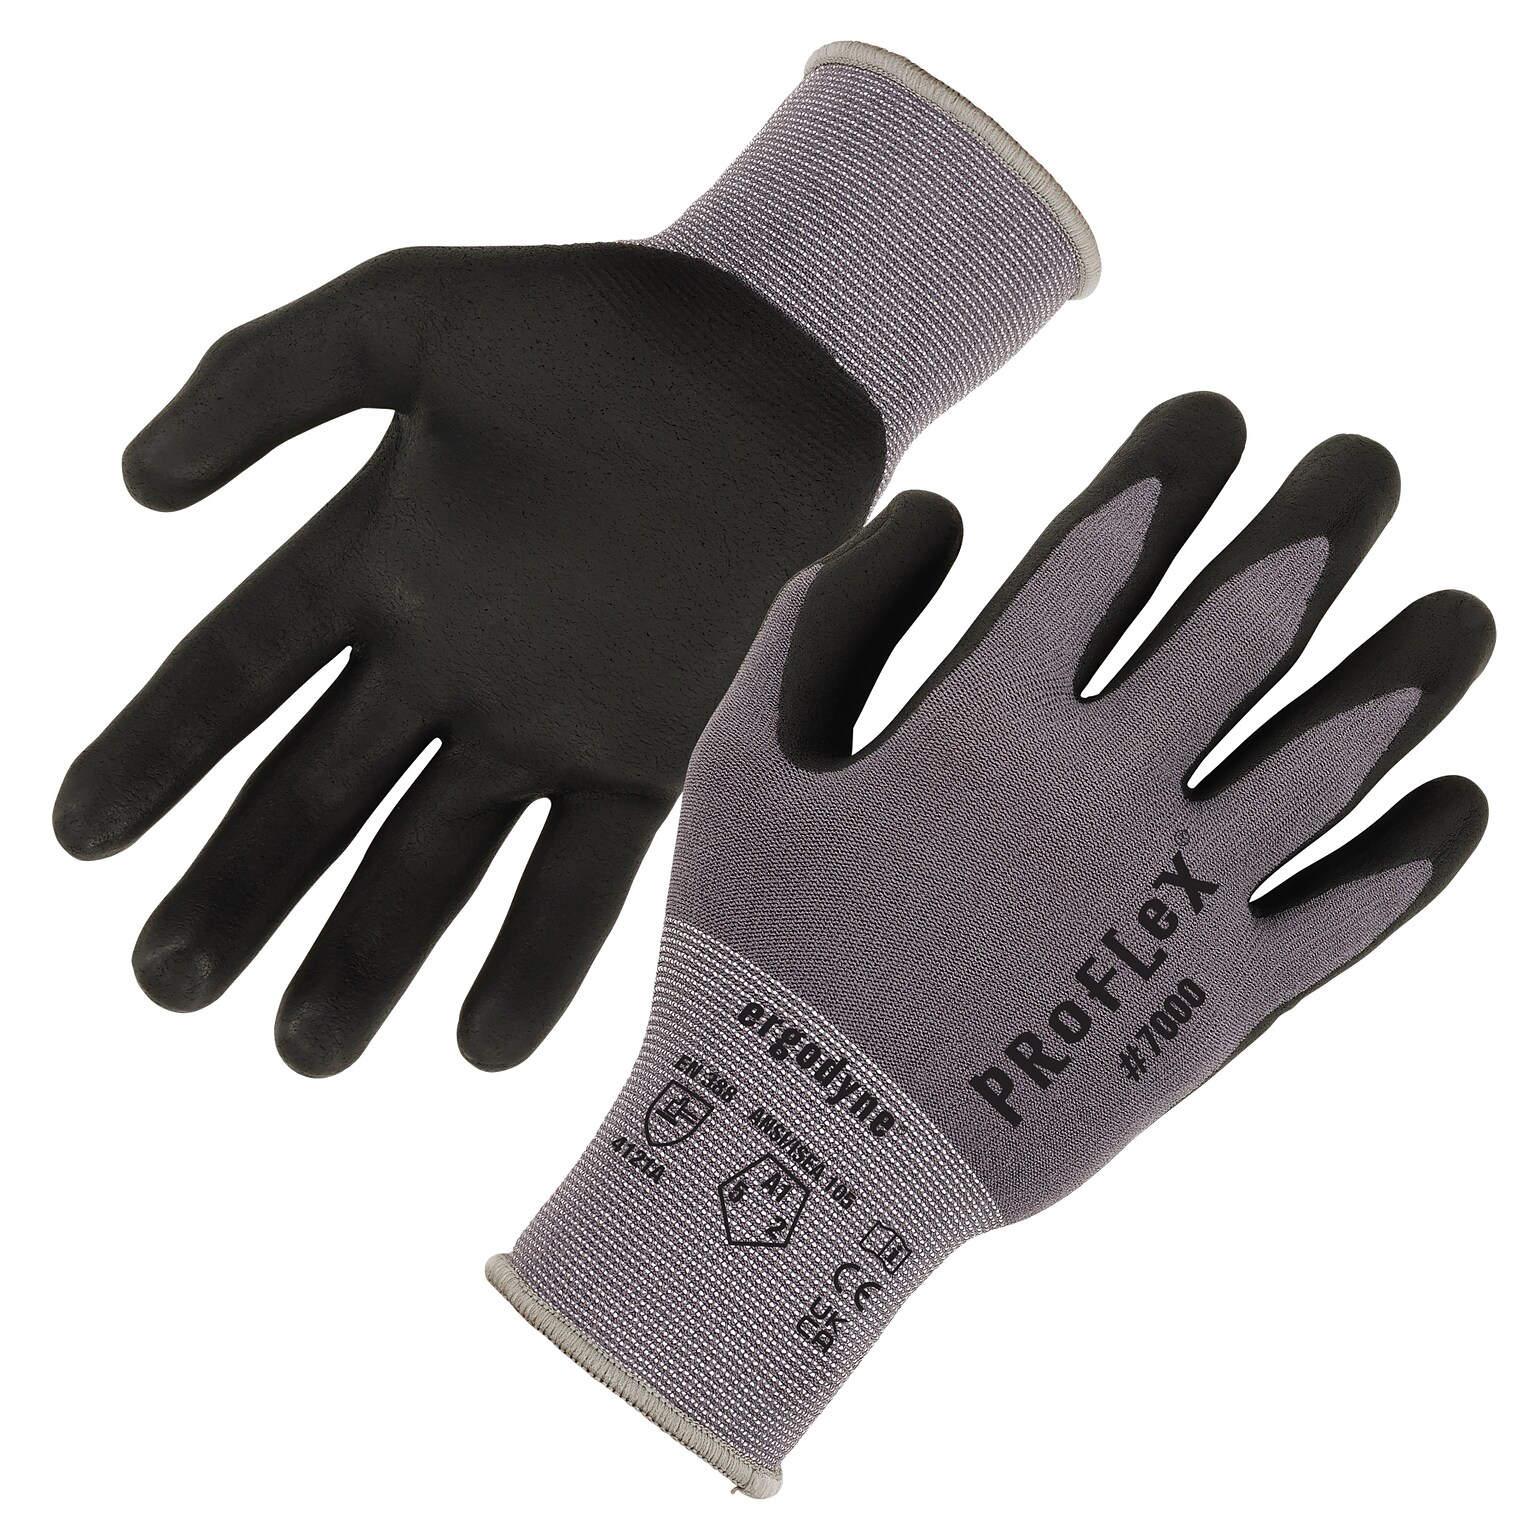 Ergodyne ProFlex 7000 Nitrile Coated Gloves, Microfoam Palm, ANSI Level 5 Abrasion Resistance, Gray, XL, 1 Pair (10375)